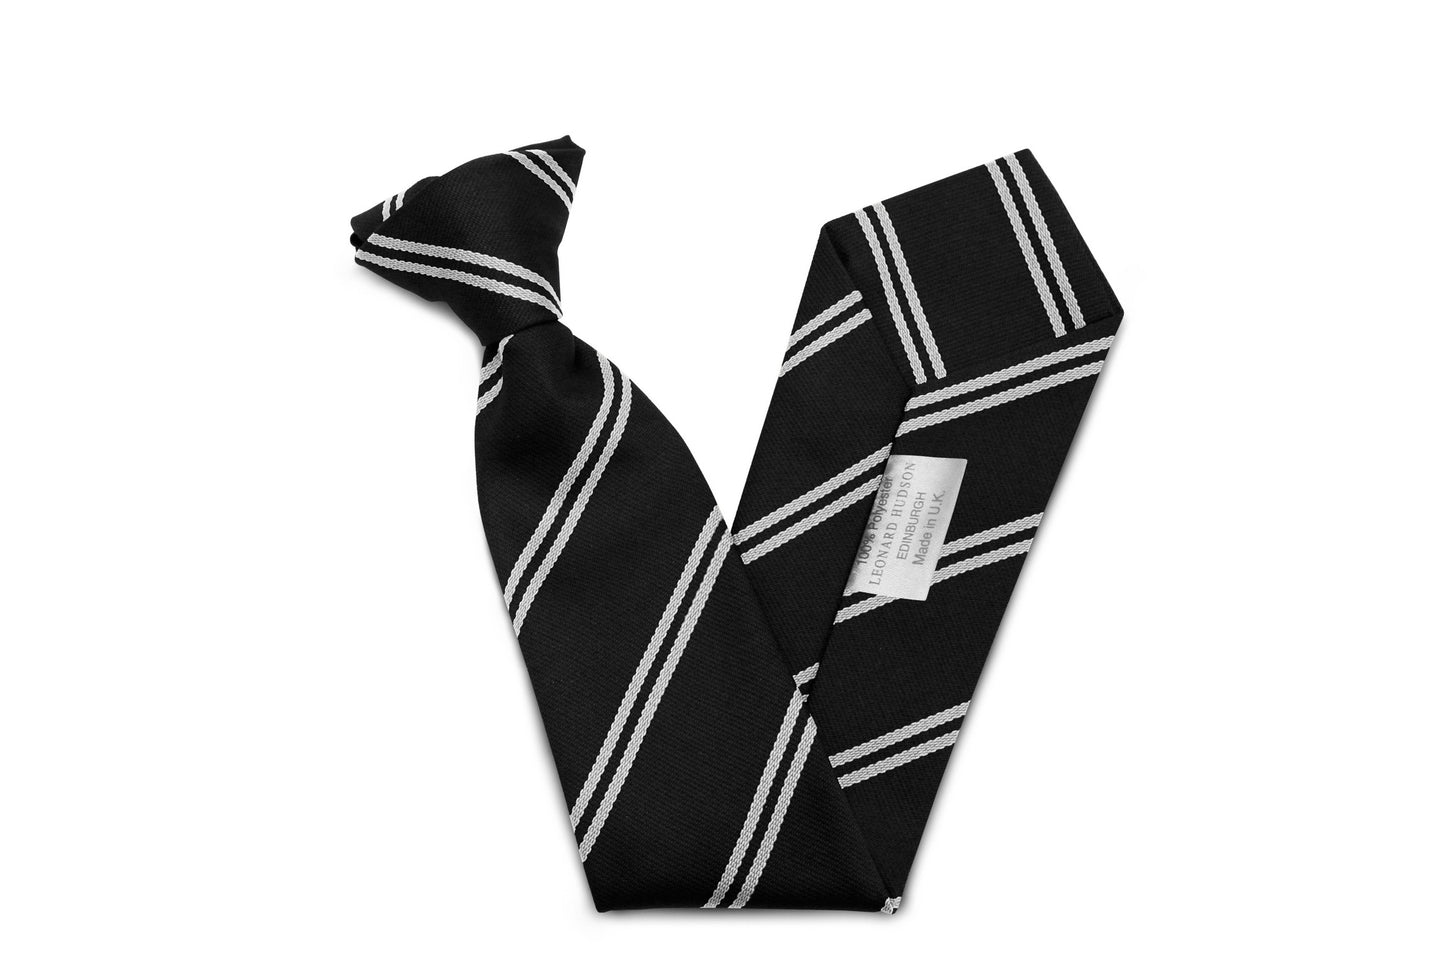 Stock Design Ties Black with Double White Stripe (5403-9201) - Lynendo Trade Store